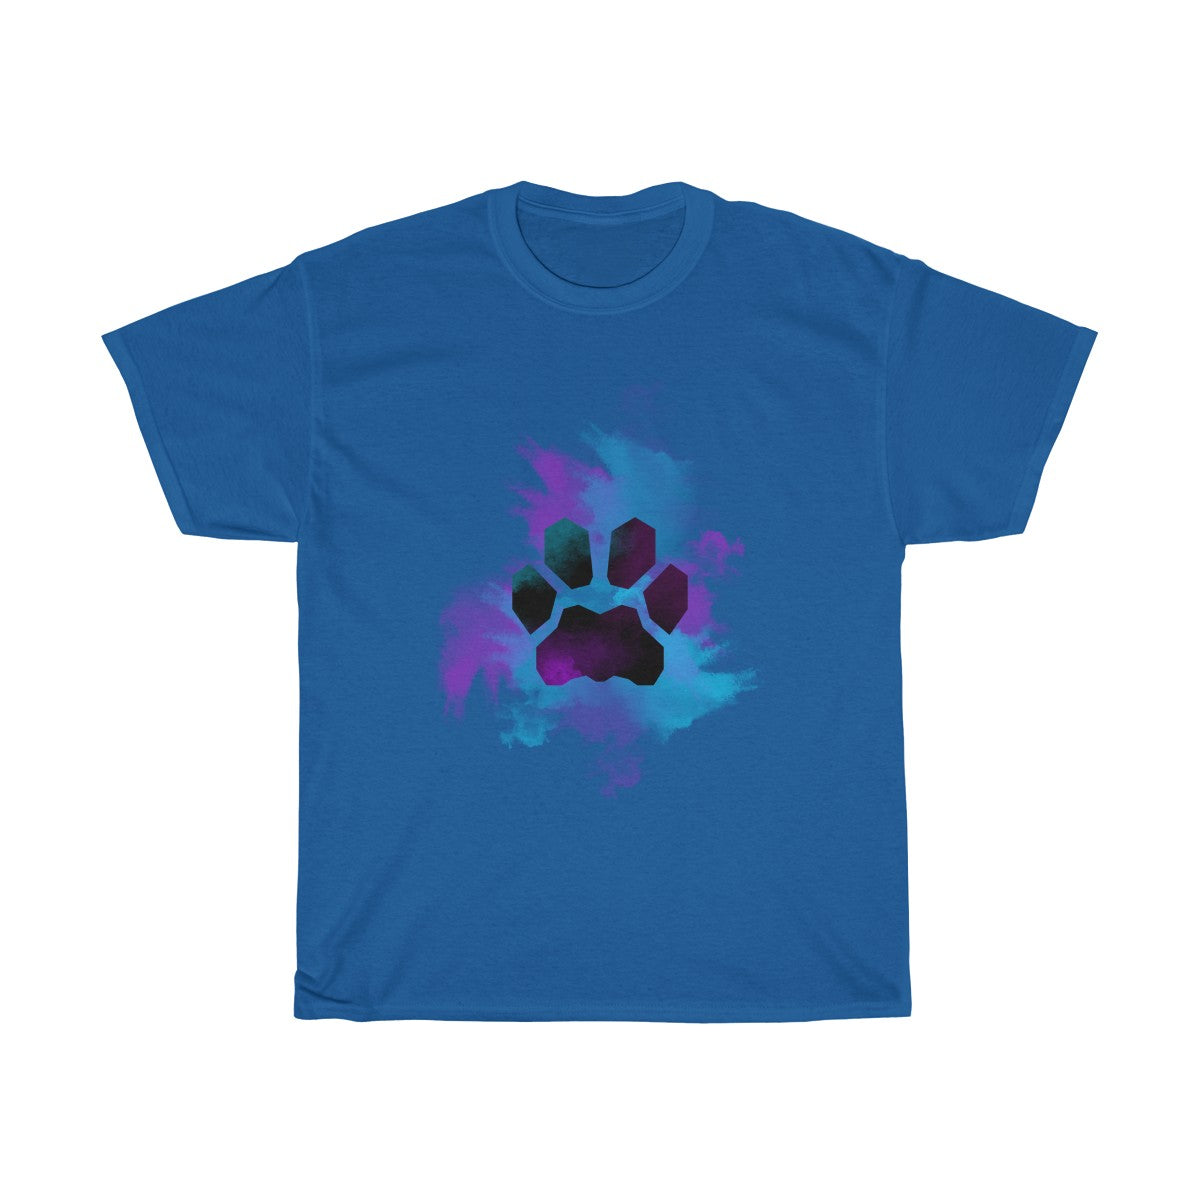 Splotch Feline - T-Shirt T-Shirt Wexon Royal Blue S 